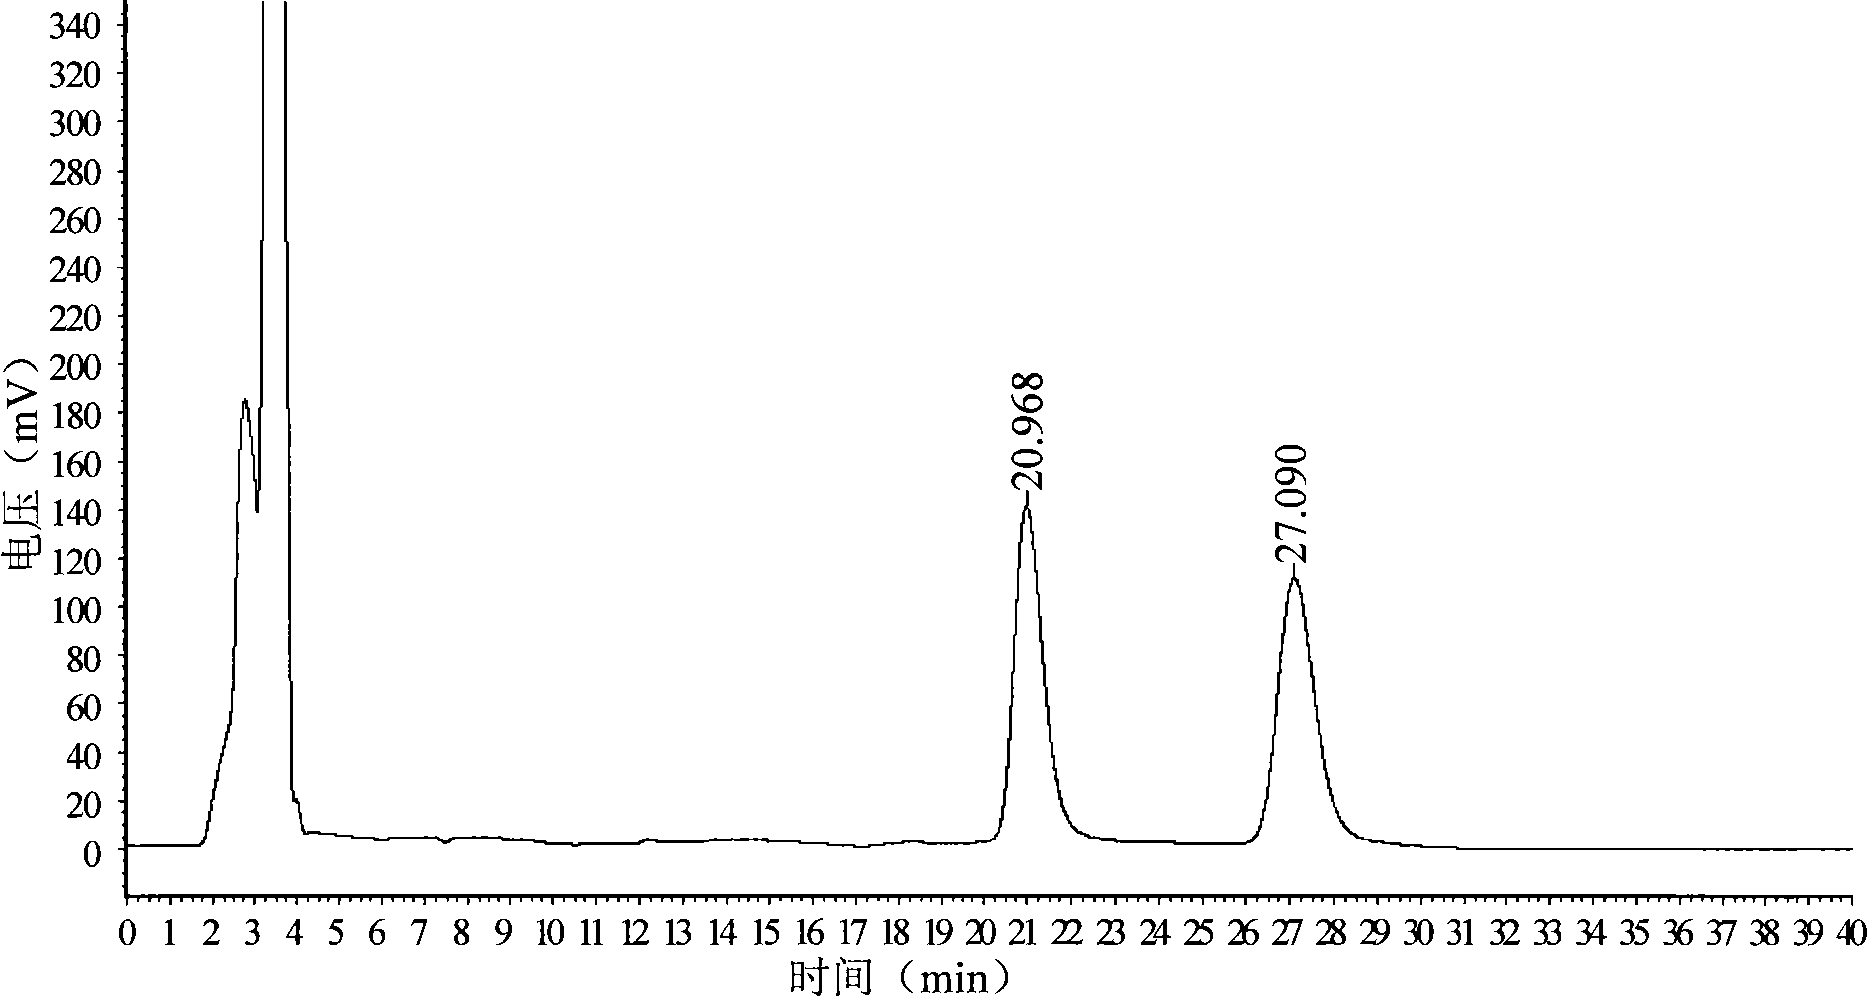 HPLC (High Performance Liquid Chromatography) method for measuring content of D-4-methylsulfonylphenyl serine ethyl ester